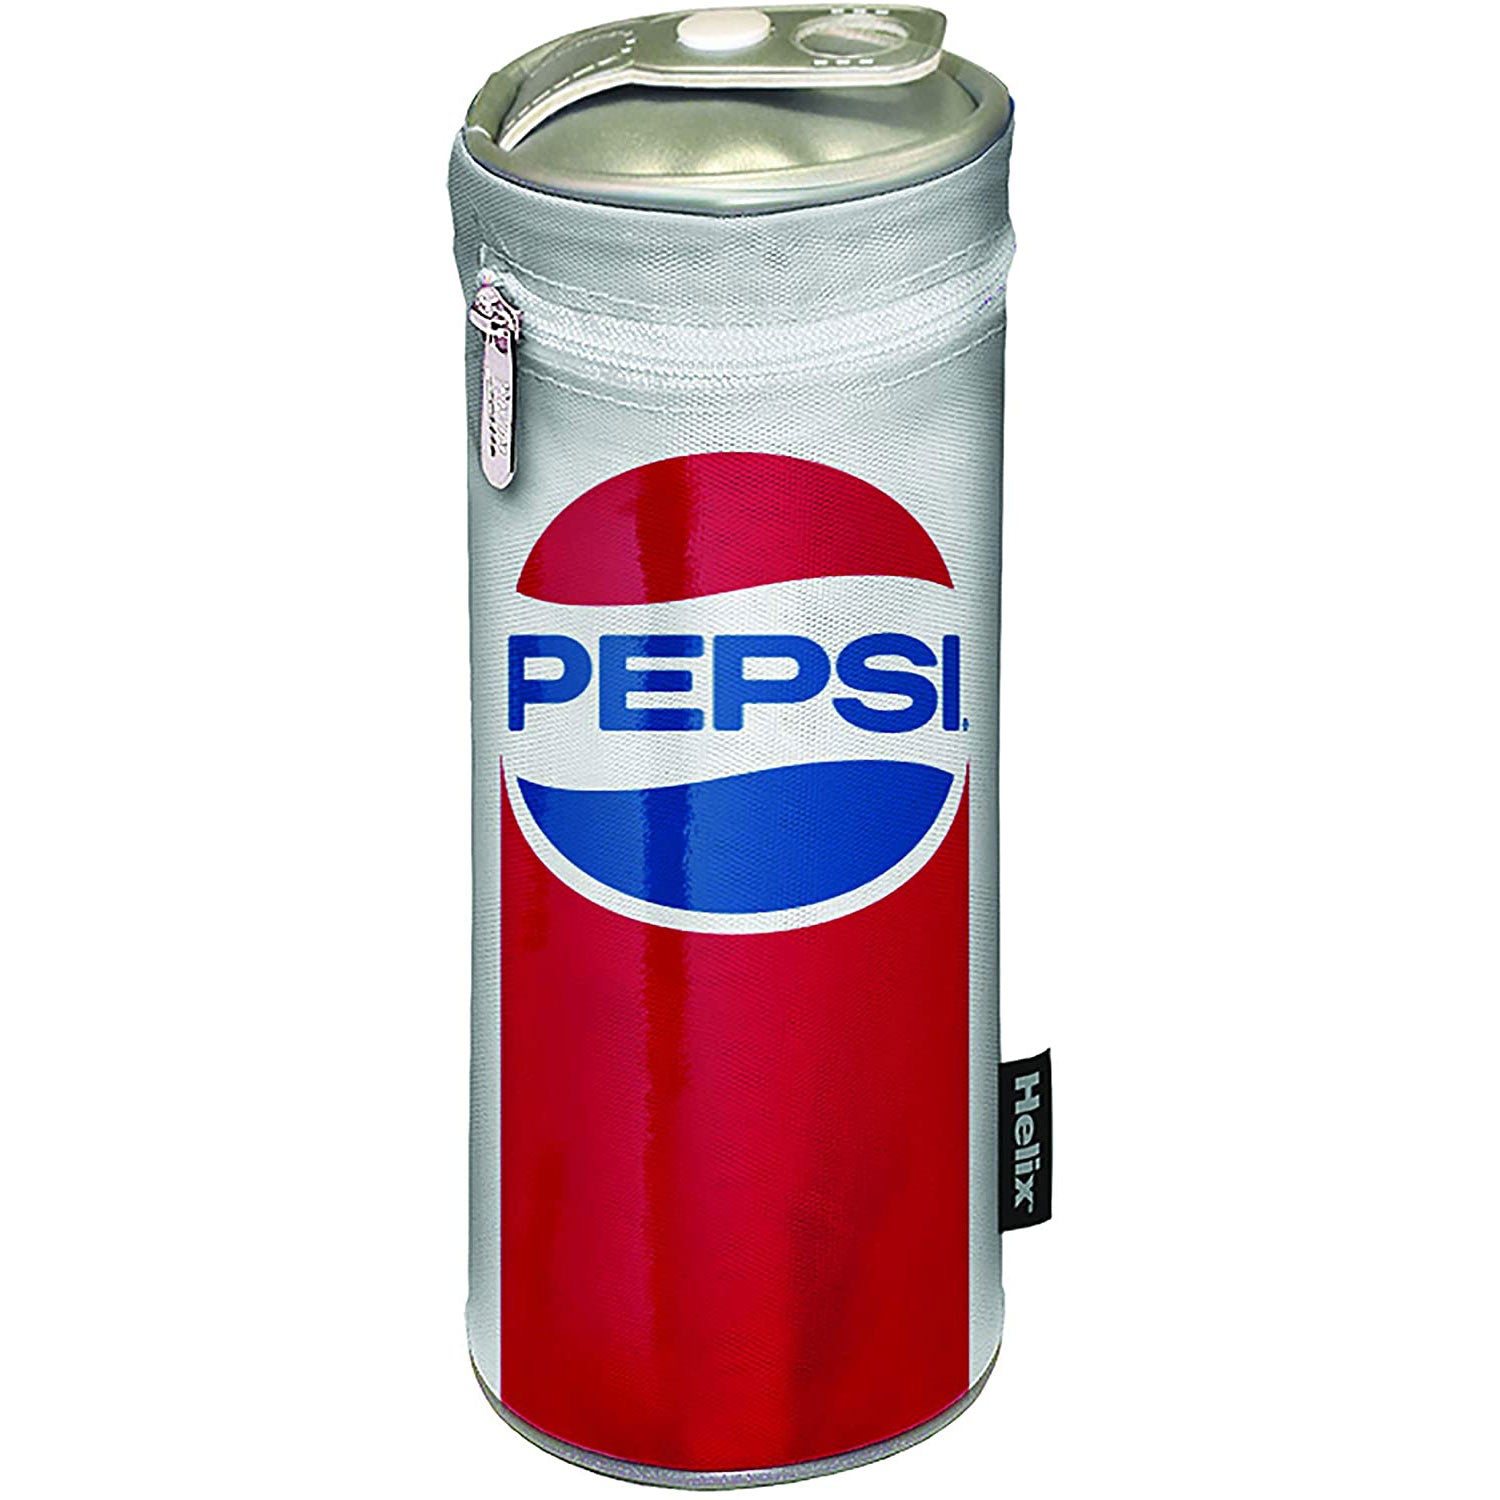 Trousse Helix Pepsi